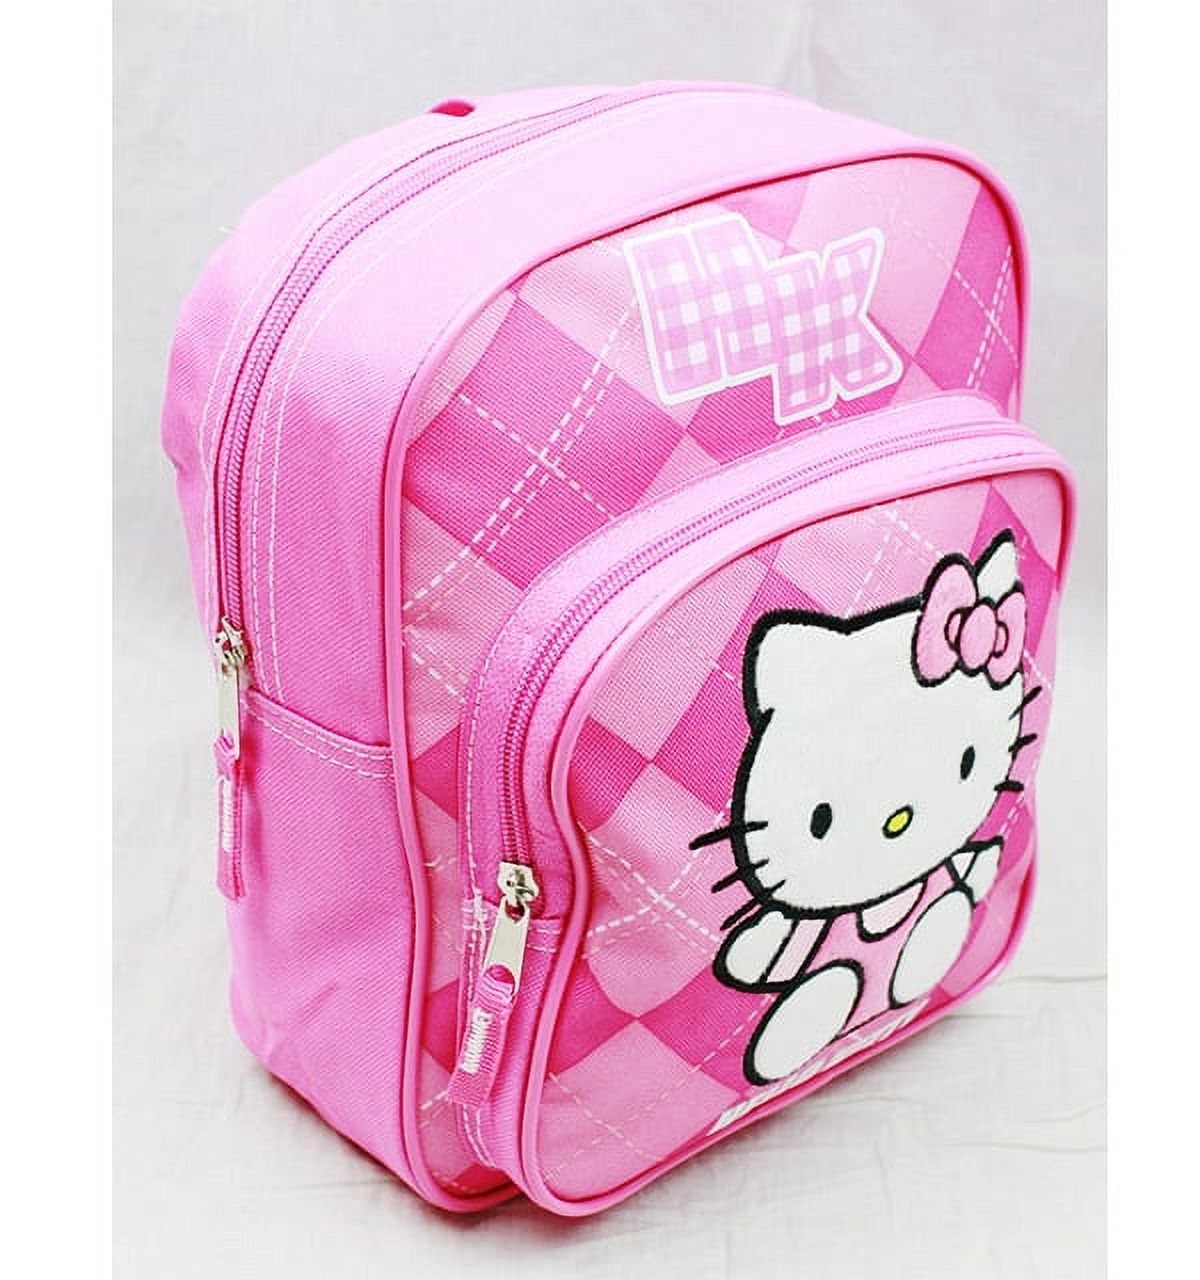 Mini Backpack - Hello Kitty - Pink Checker New School Bag Book Girls 82080 - image 2 of 3